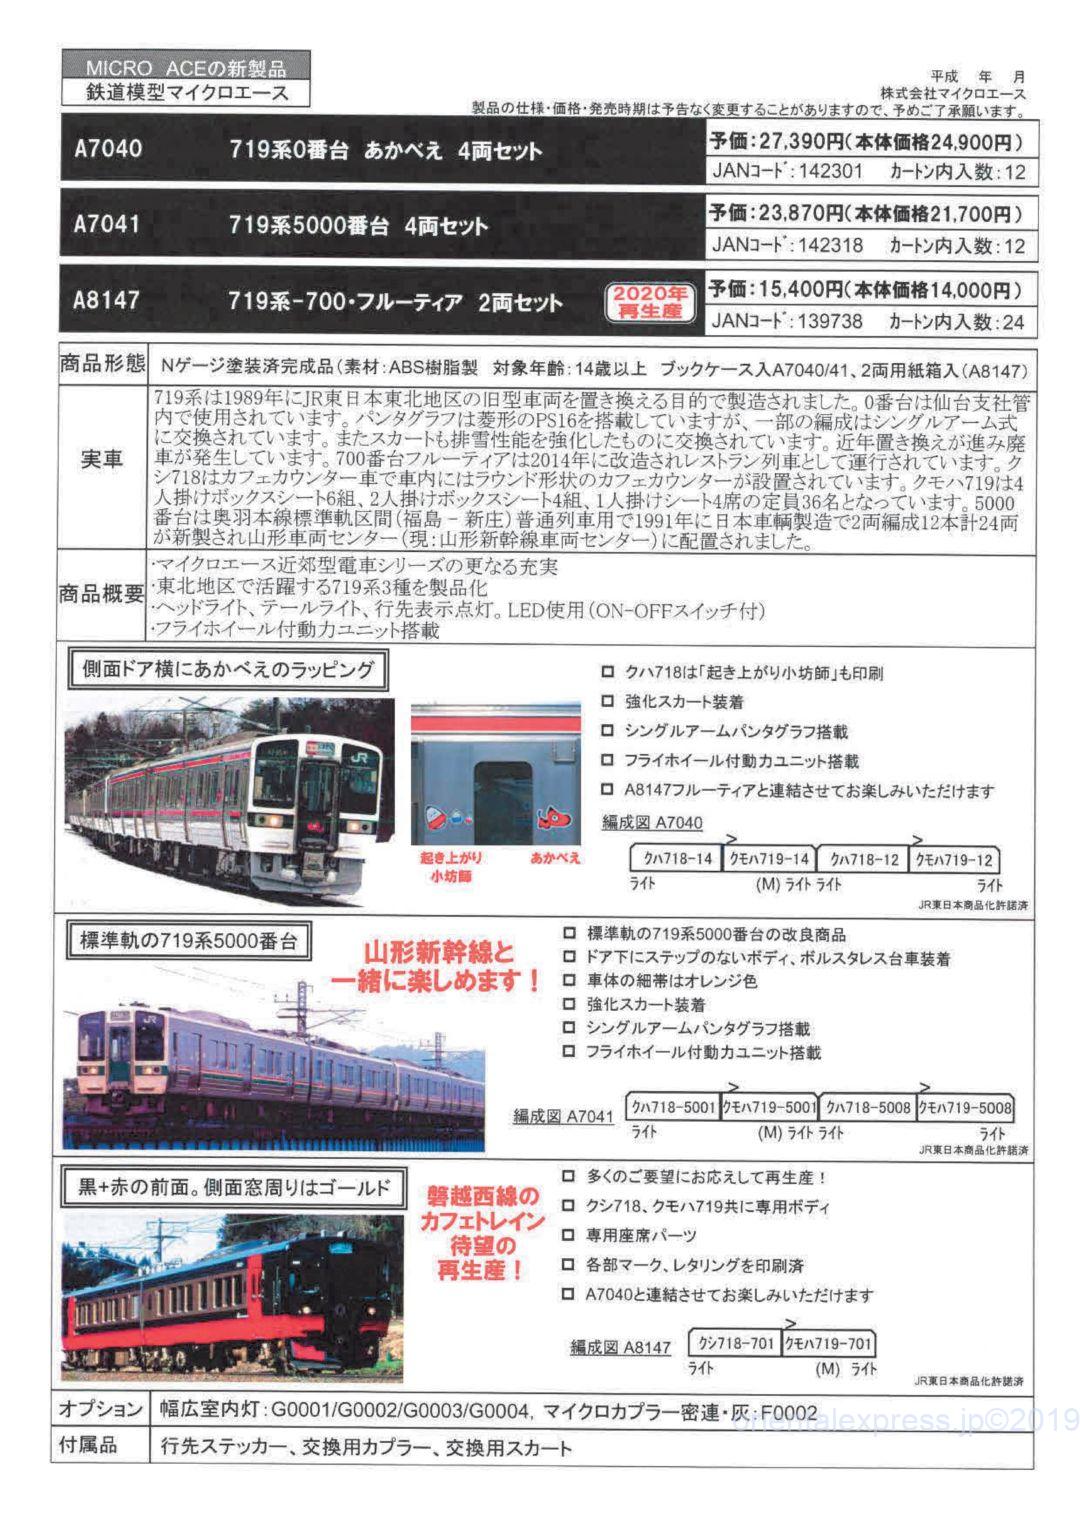 MICROACE 新製品発表 2020年3月 #マイクロエース ☆彡 横浜模型 #鉄道